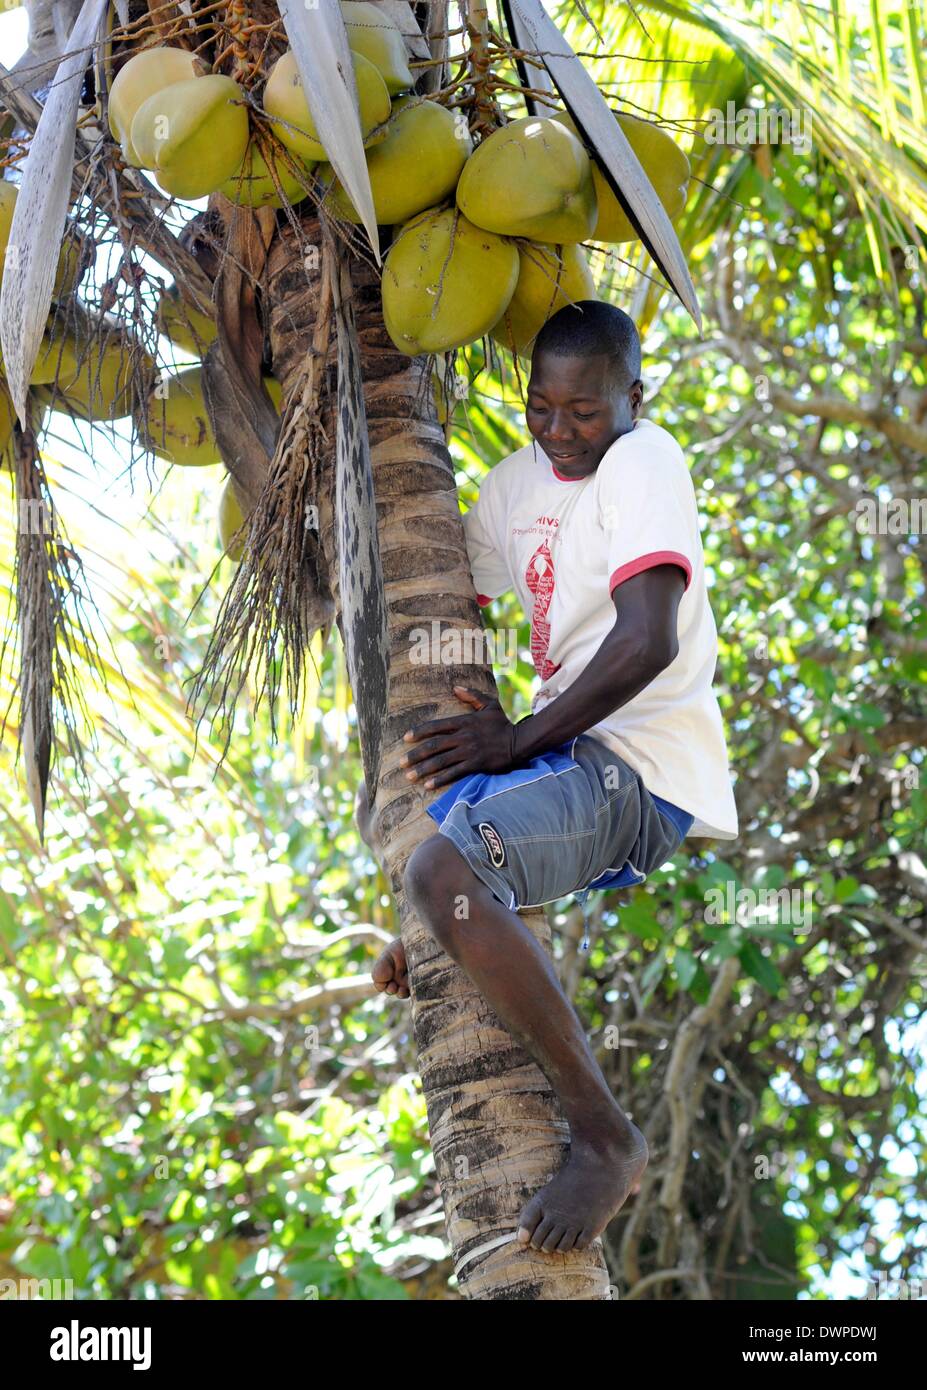 A man fetches coconuts from a coconut palm (Cocos nucifera) in Inhambane, Mozambique, 03 March 2013. Photo: Britta Pedersen -NO WIRE SERVICE- Stock Photo